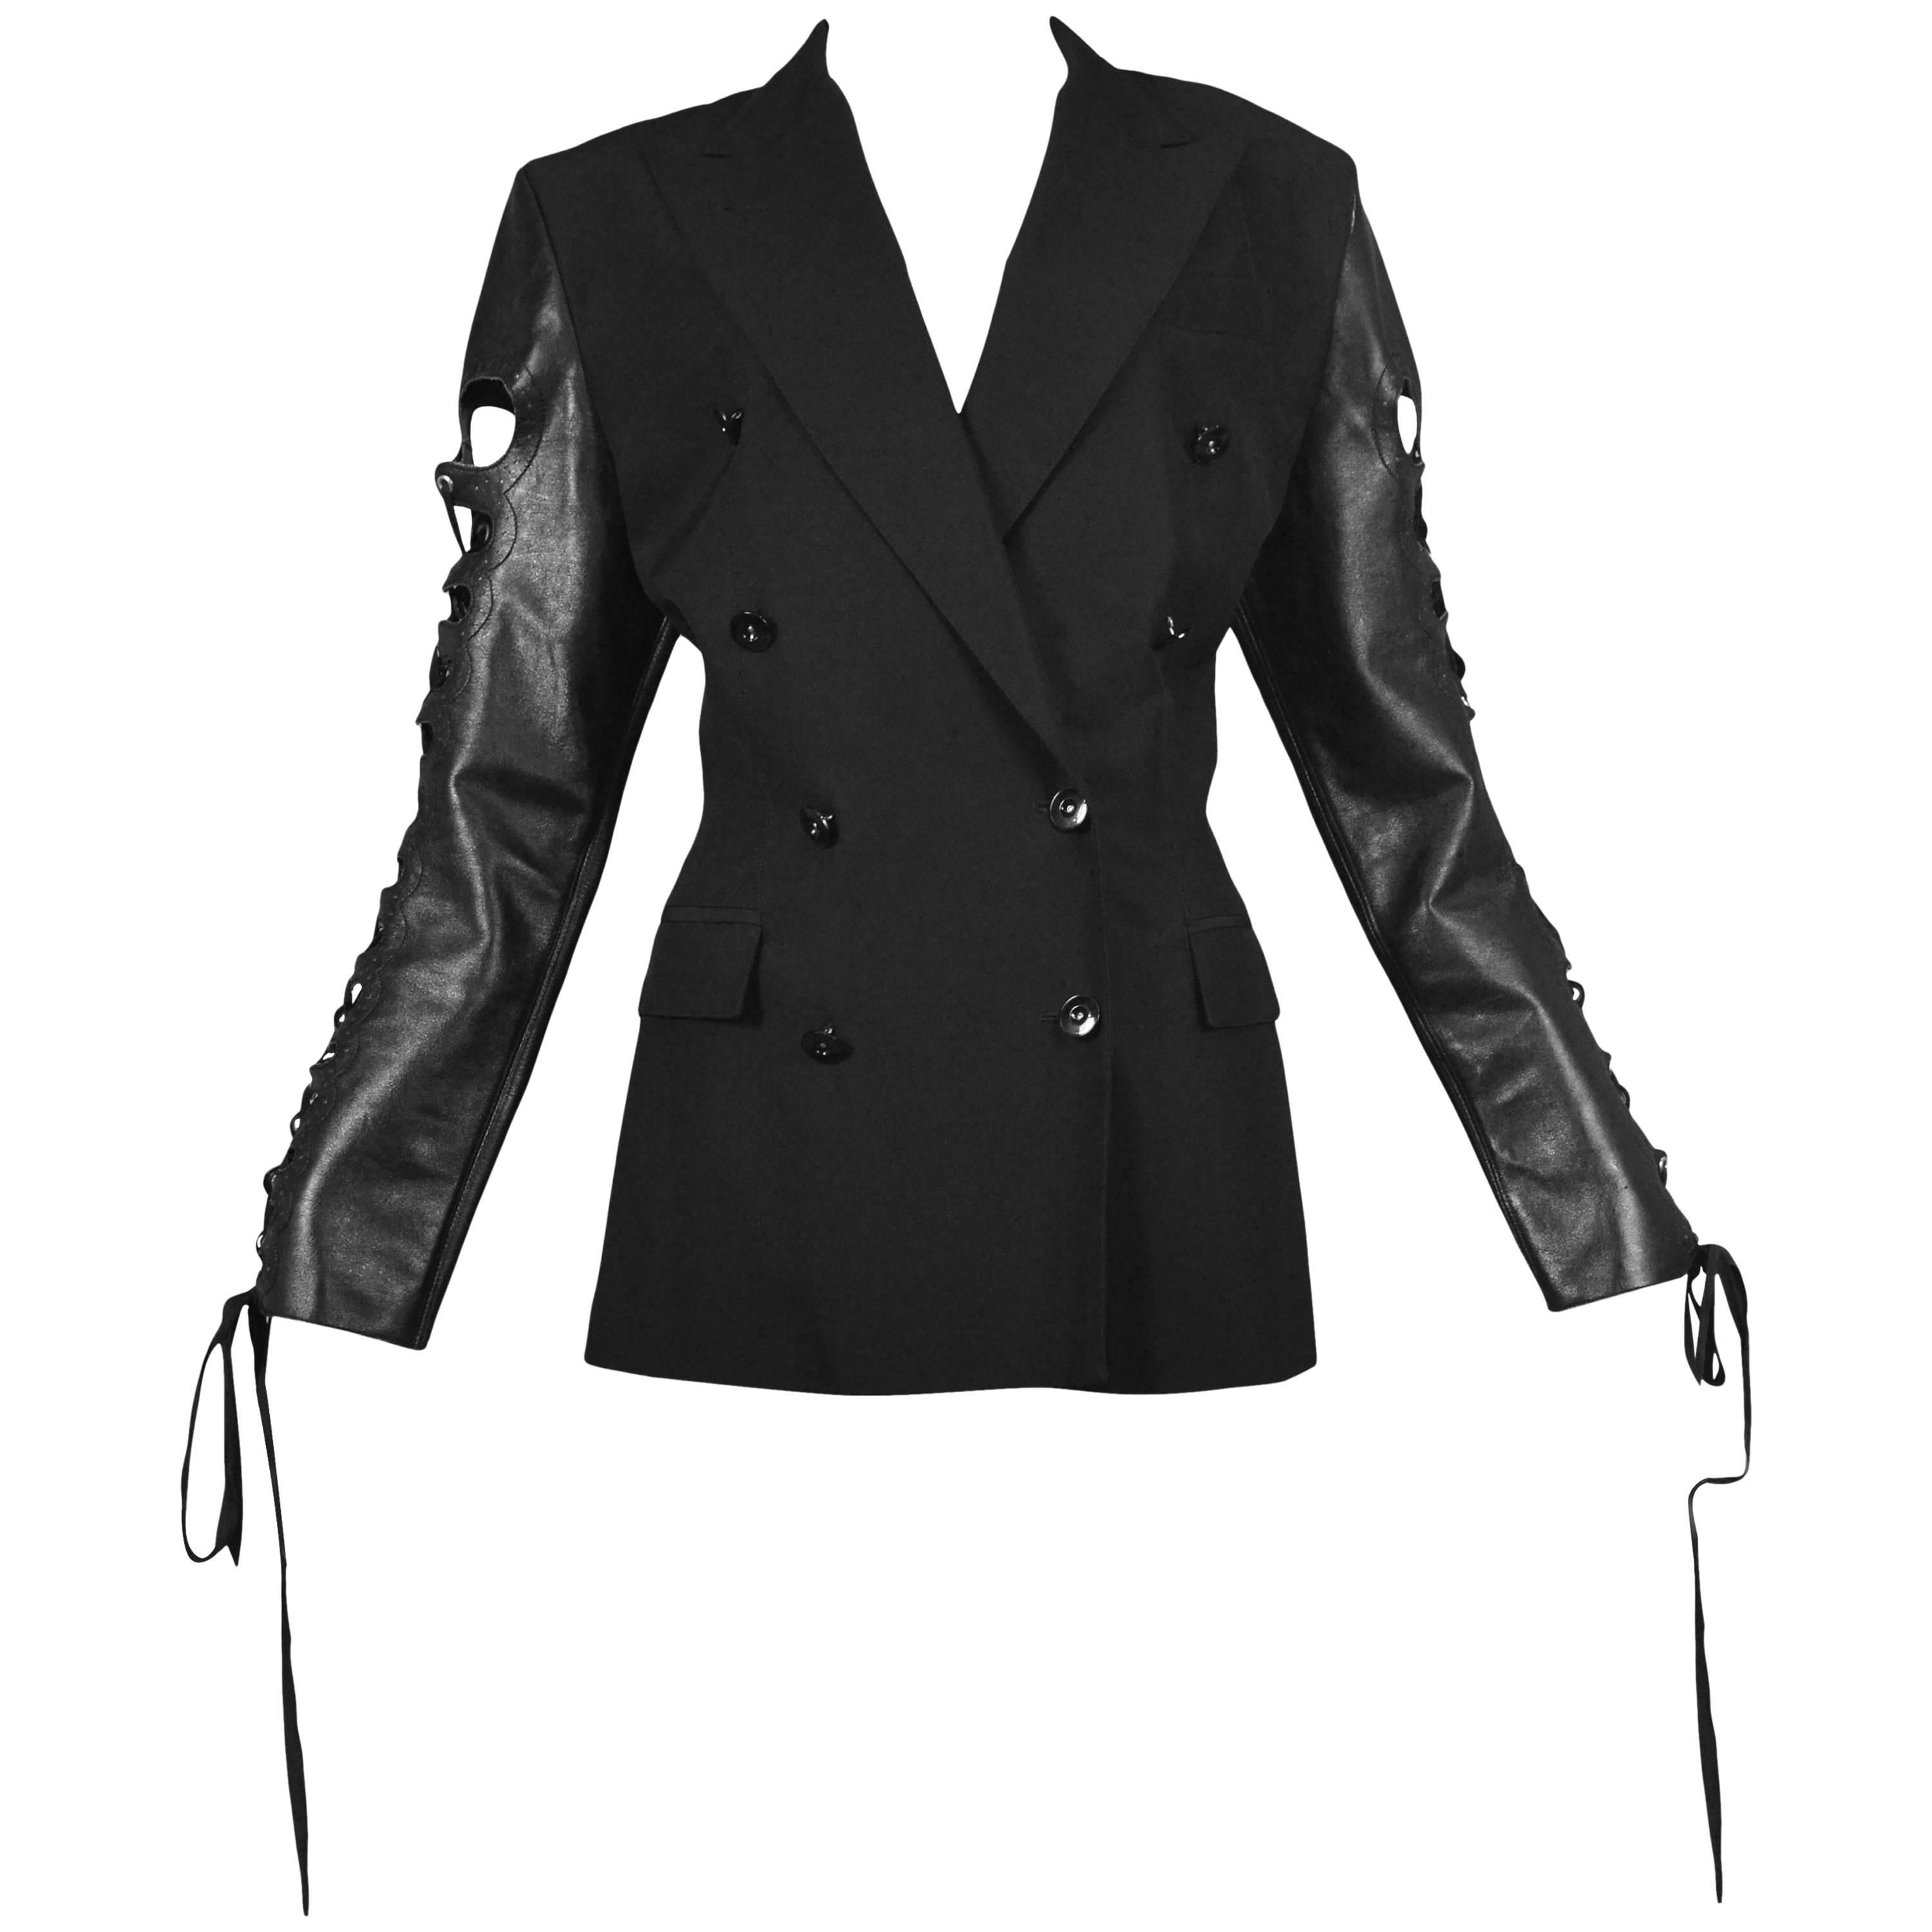 Gaultier Black Leather Lace Up Sleeve Jacket